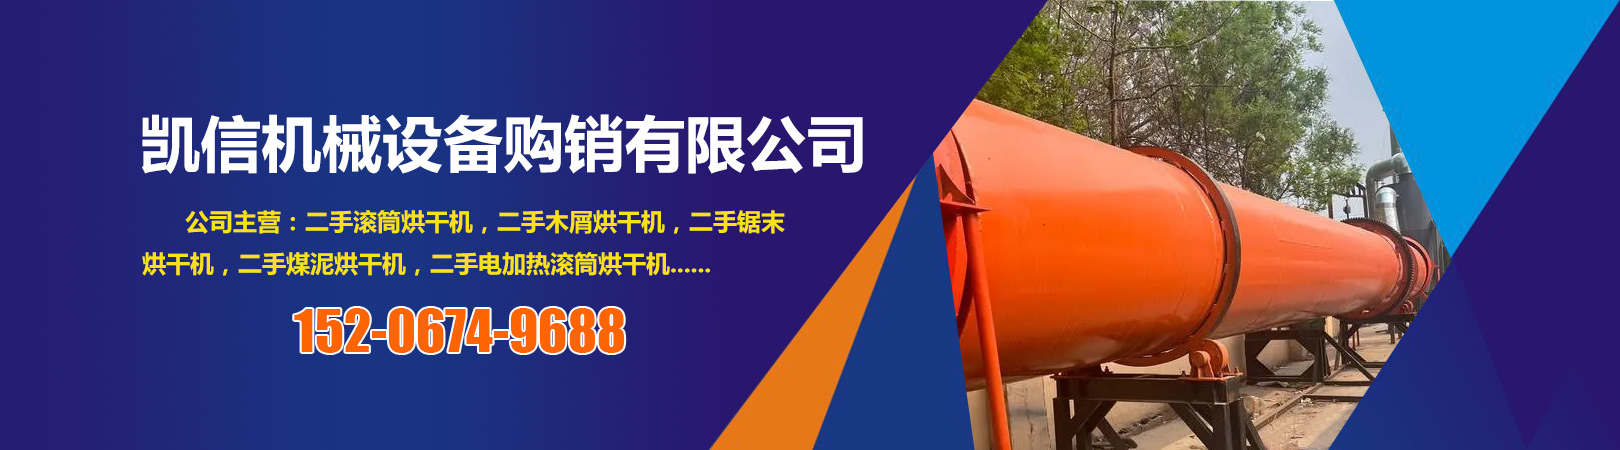 310S耐高温烘干机回收价格、四平本地310S耐高温烘干机回收价格、四平、四平310S耐高温烘干机回收价格